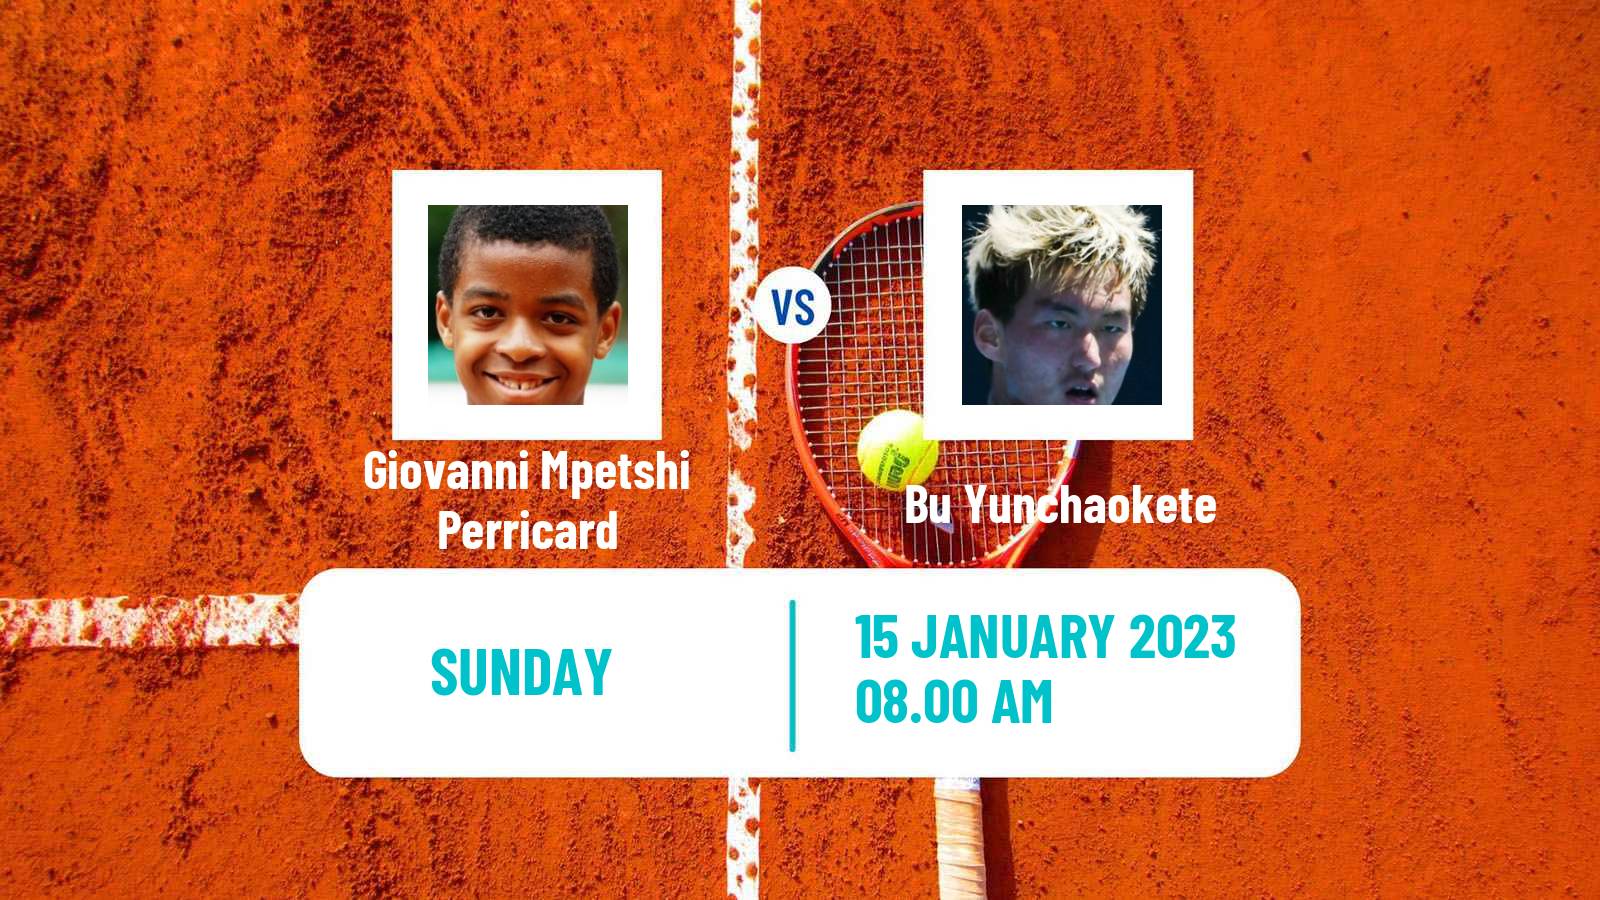 Tennis ATP Challenger Giovanni Mpetshi Perricard - Bu Yunchaokete